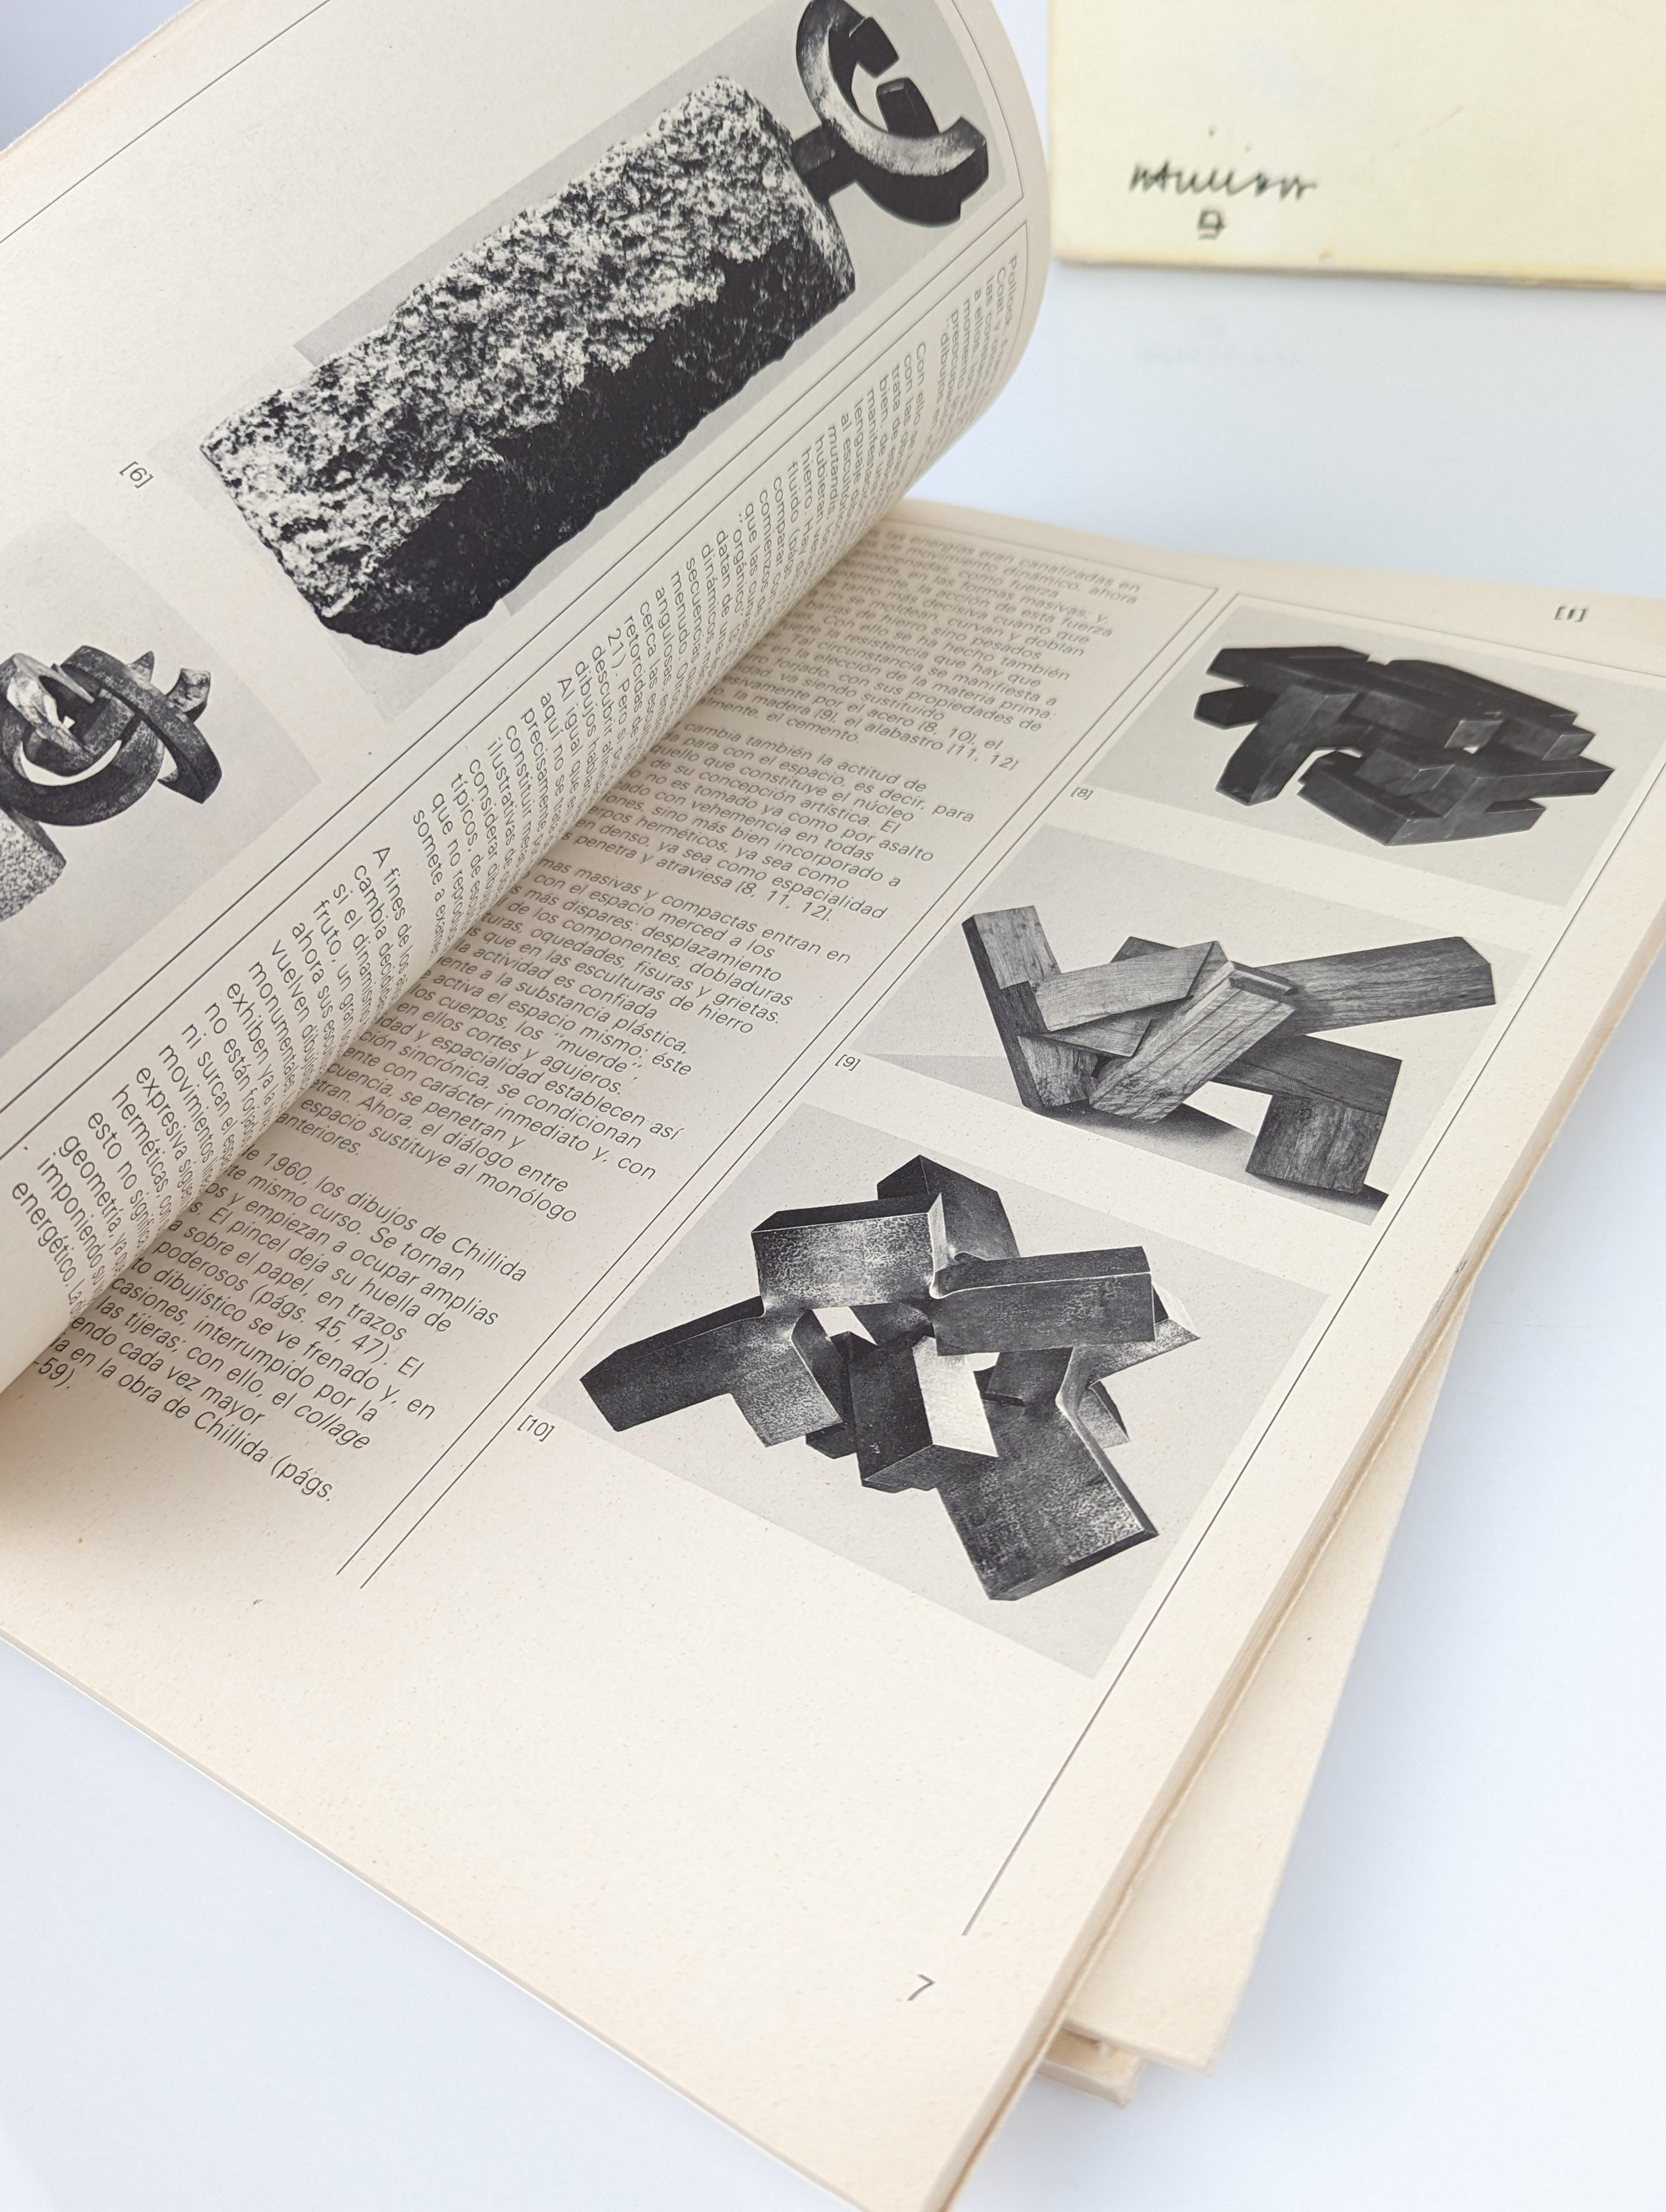 Paper Eduardo Chillida by Werner Schmalenbach '3 Volumes', 1979